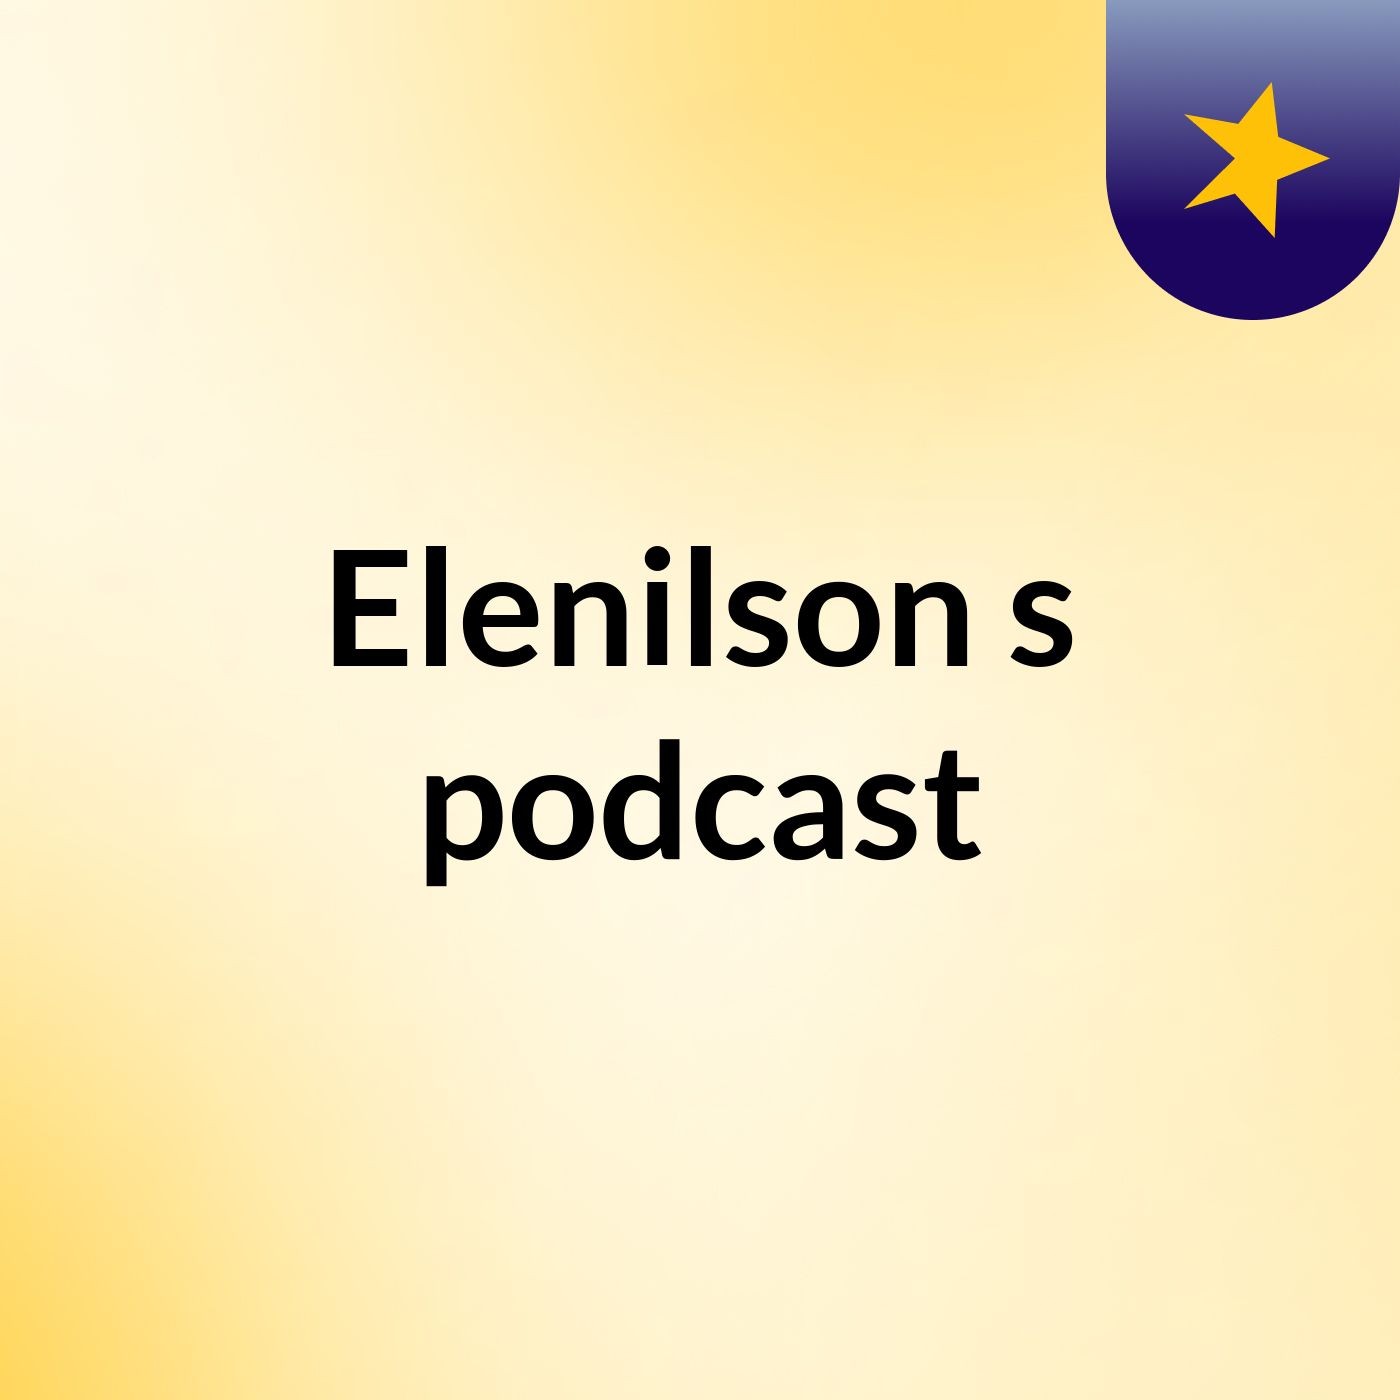 Elenilson's podcast